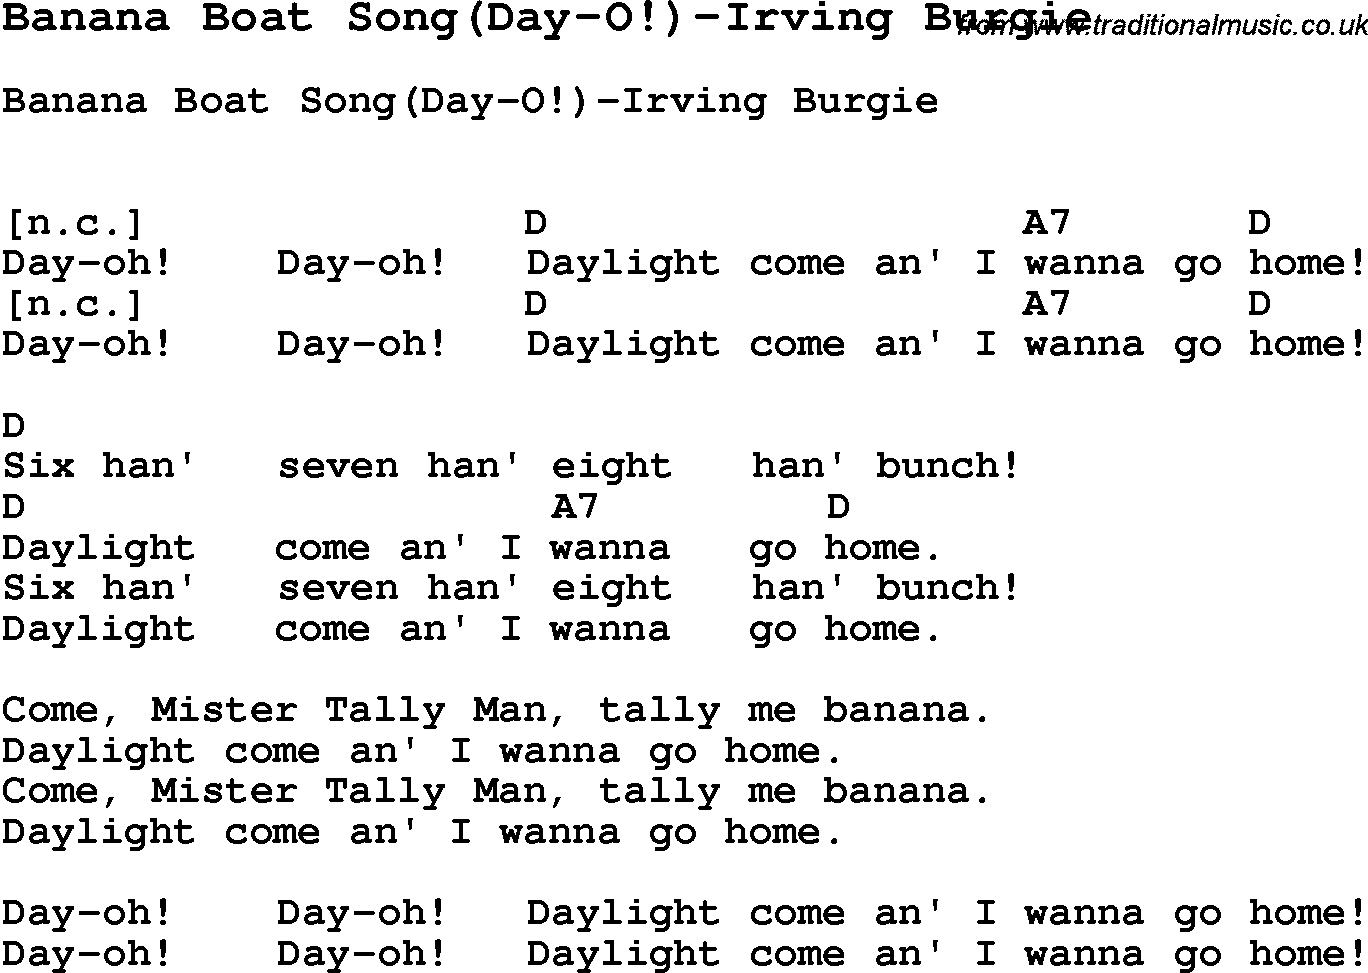 Summer-Camp Song, Banana Boat Song(Day-O!)-Irving Burgie, with lyrics and chords for Ukulele, Guitar Banjo etc.